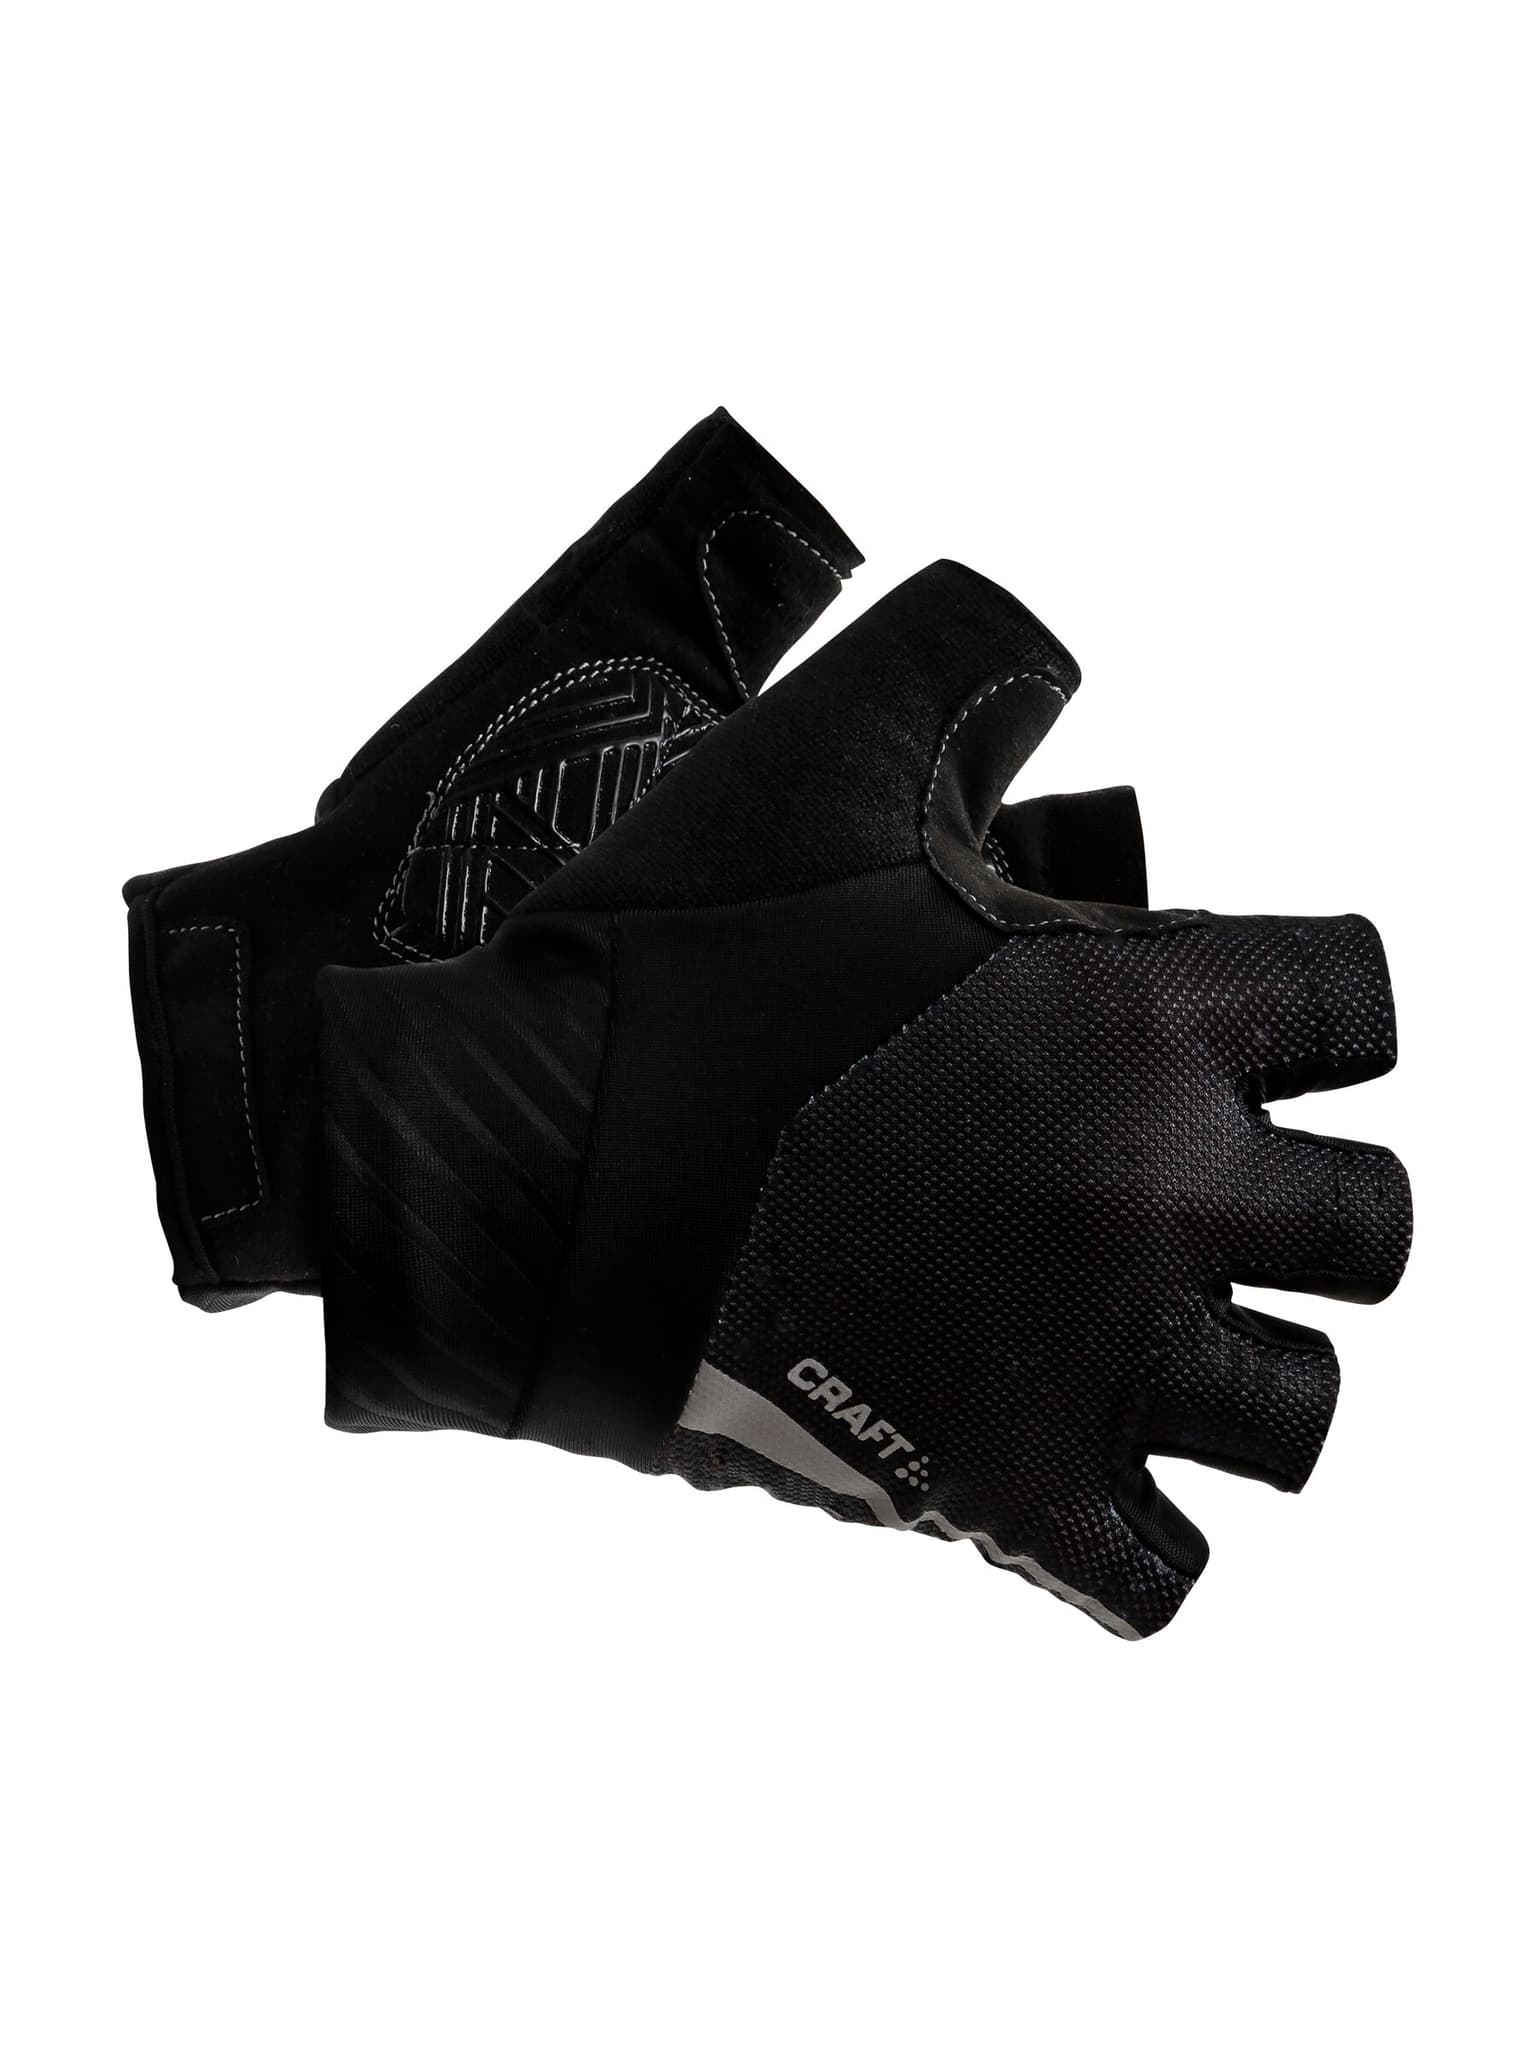 Craft Craft Adv Rouleur Glove Handschuhe nero 1